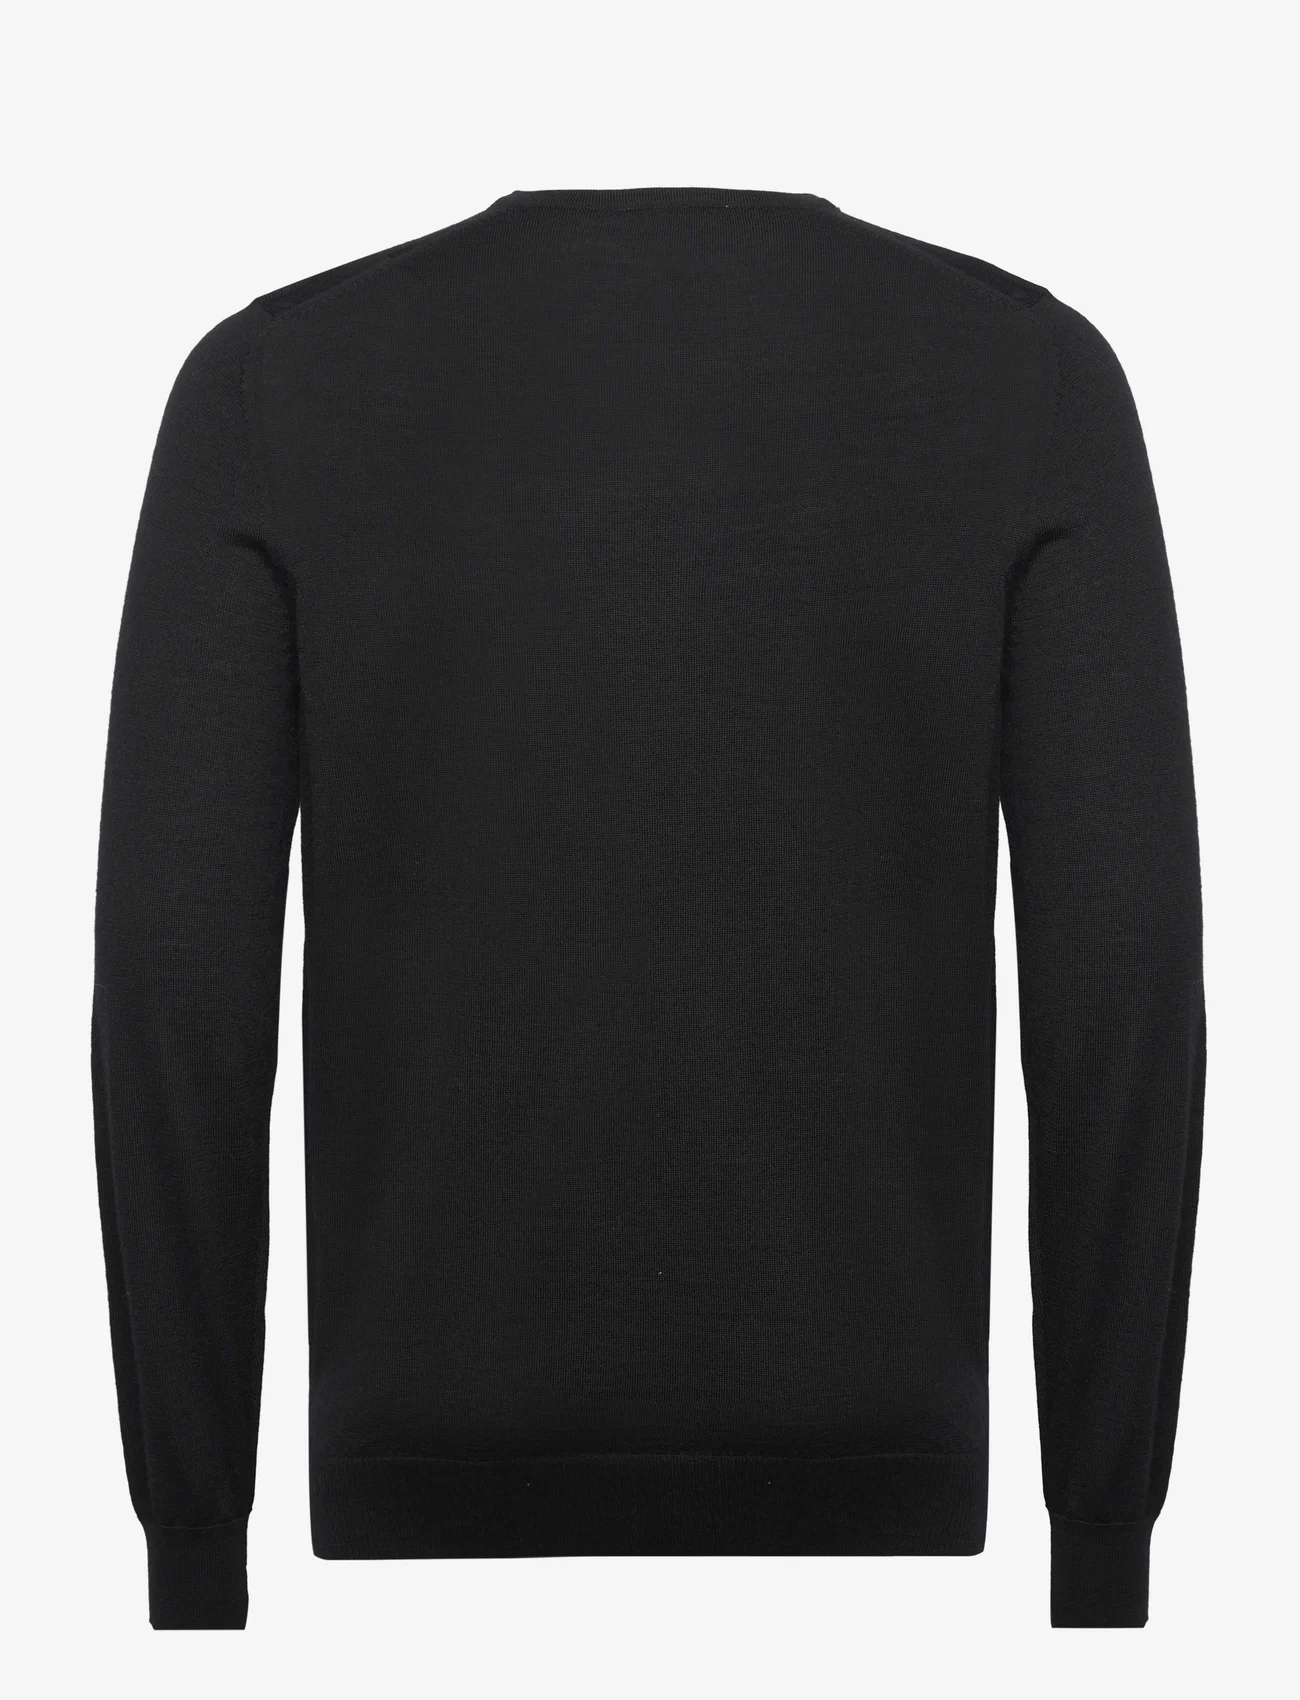 Bruun & Stengade - BS Jenkins Regular Fit Knitwear - knitted v-necks - black - 1